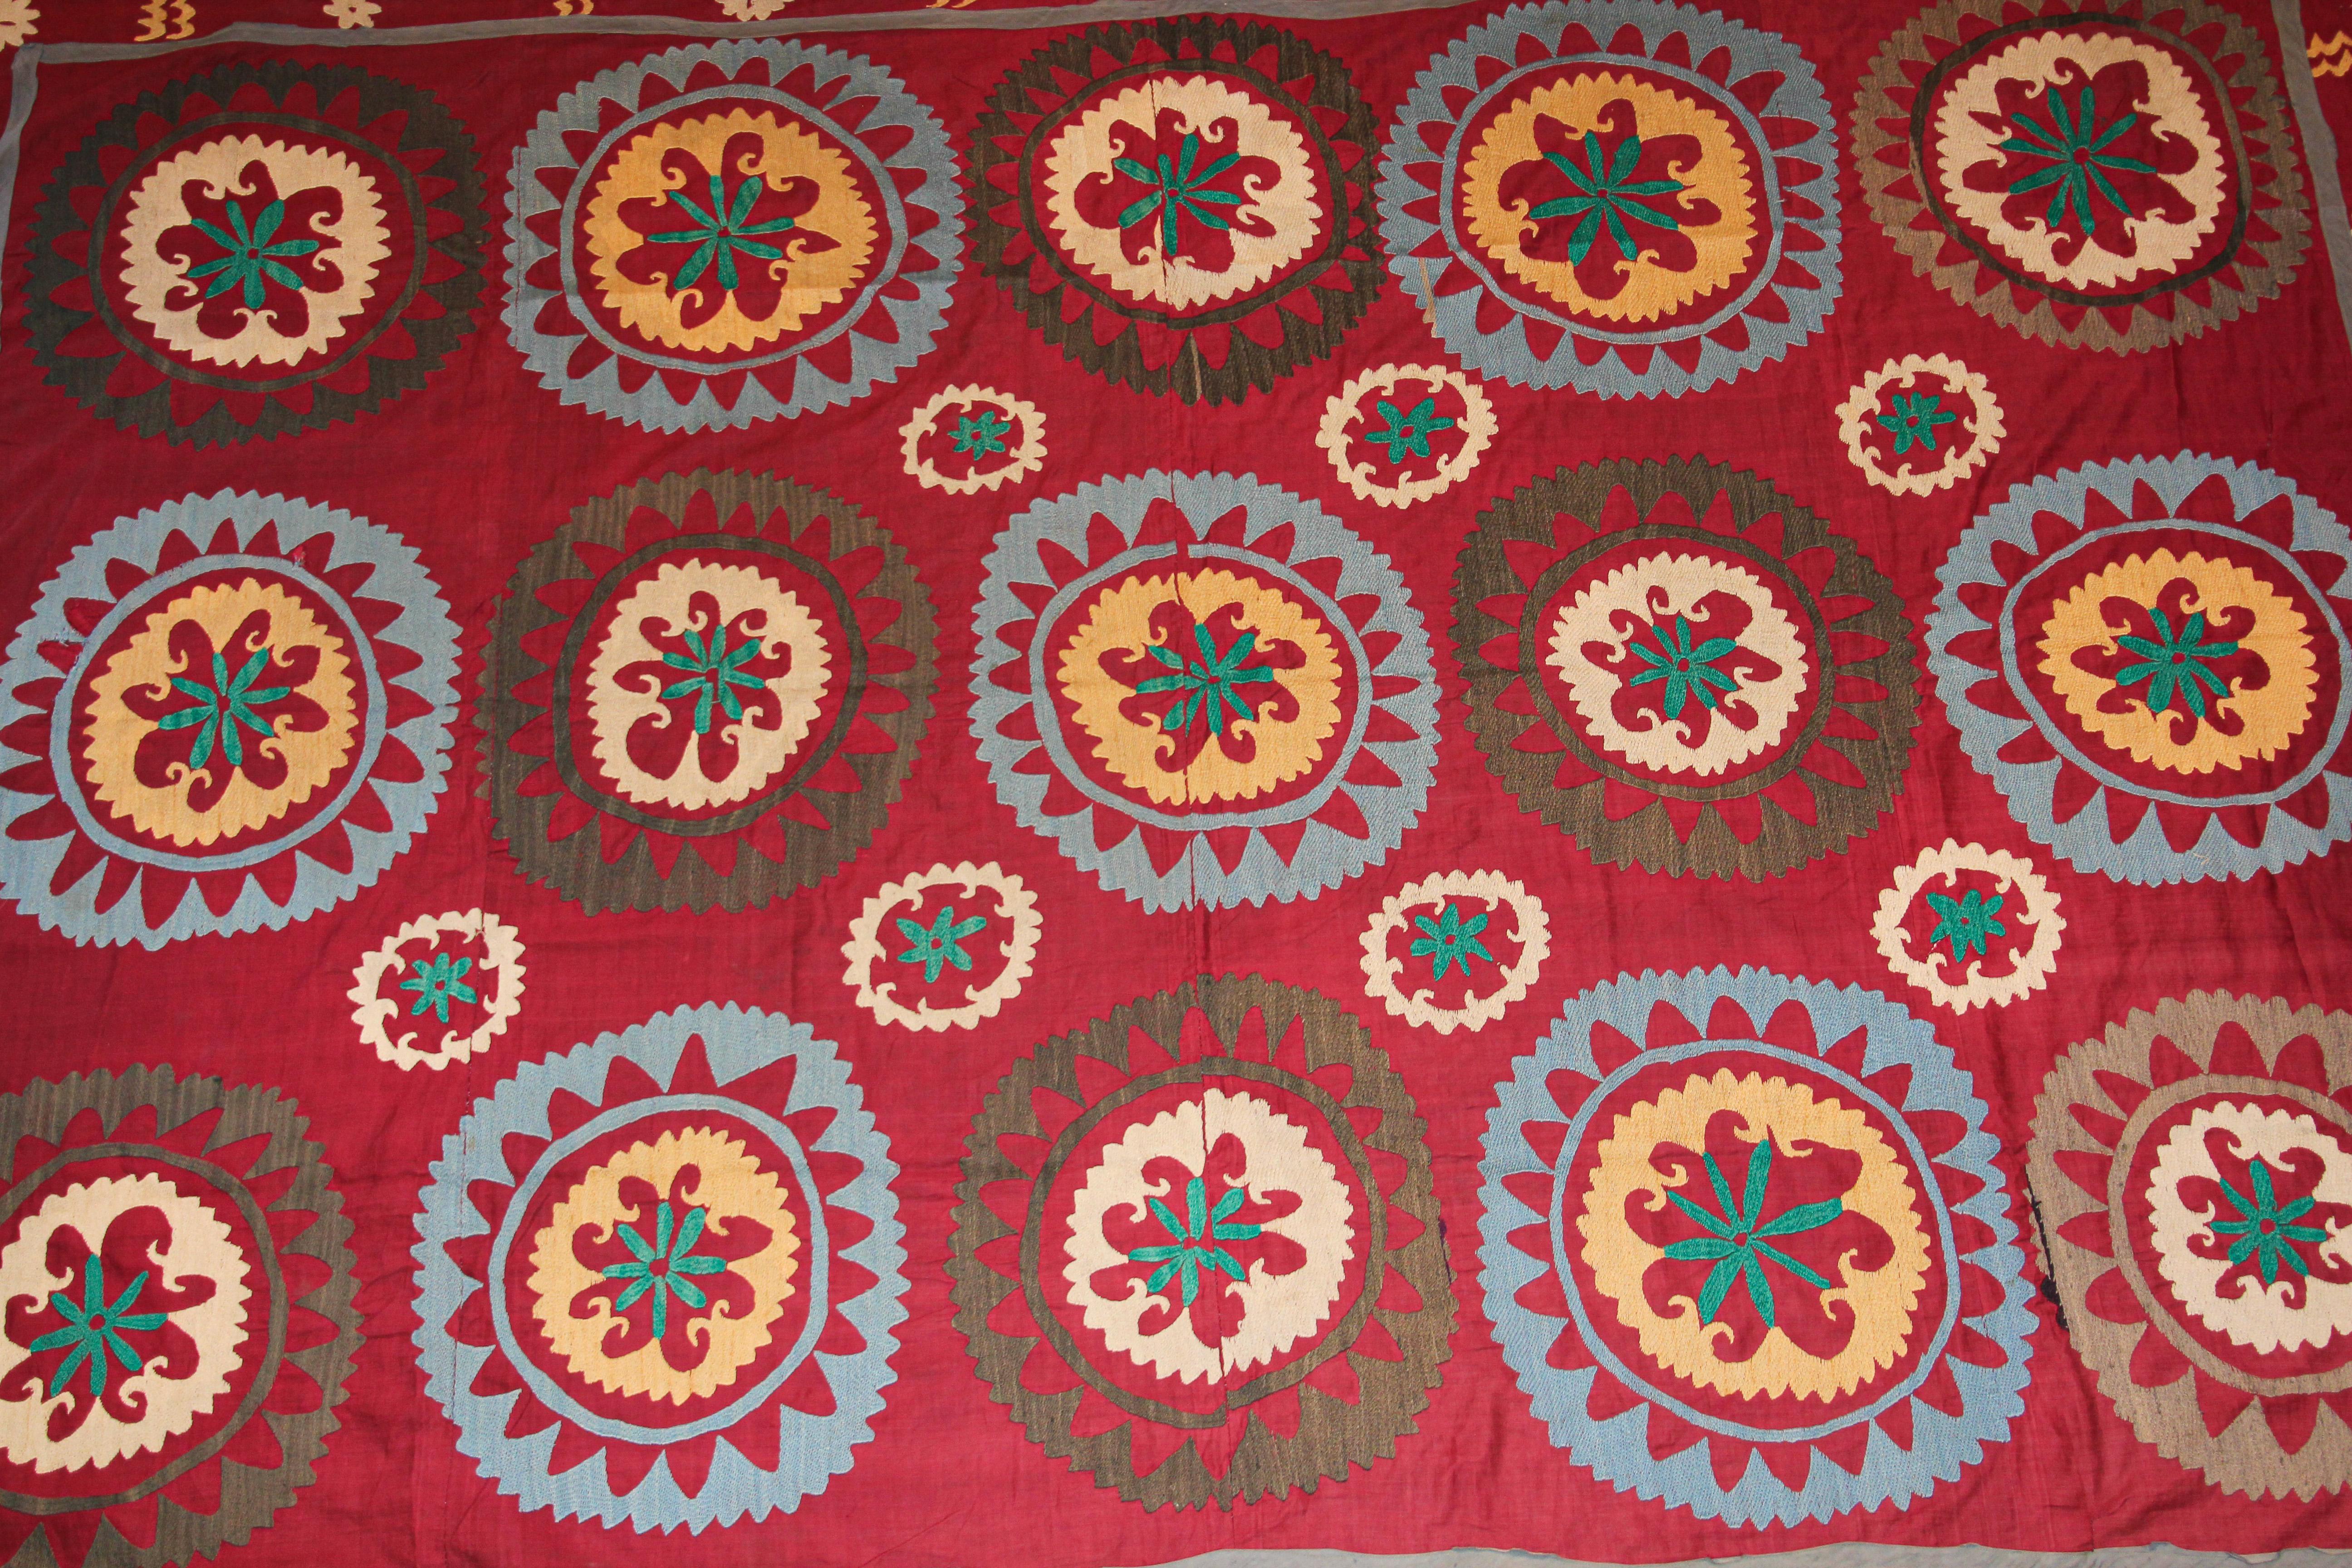 Vintage Uzbek Suzani Needlework Textile Blanket or Tapestry 9